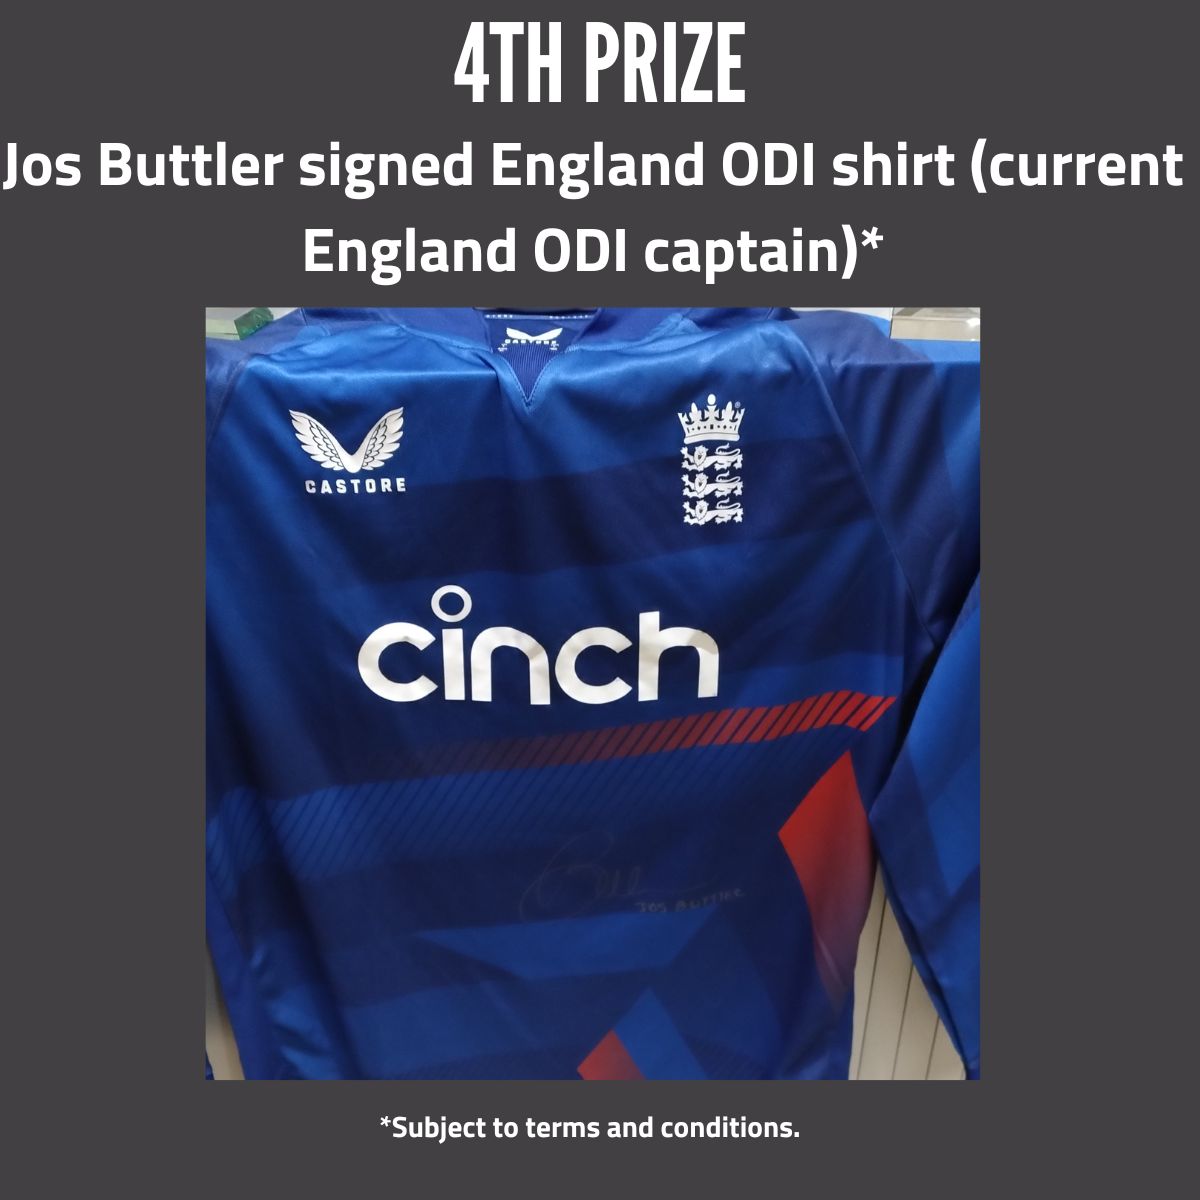 Signed Cricket Shirt